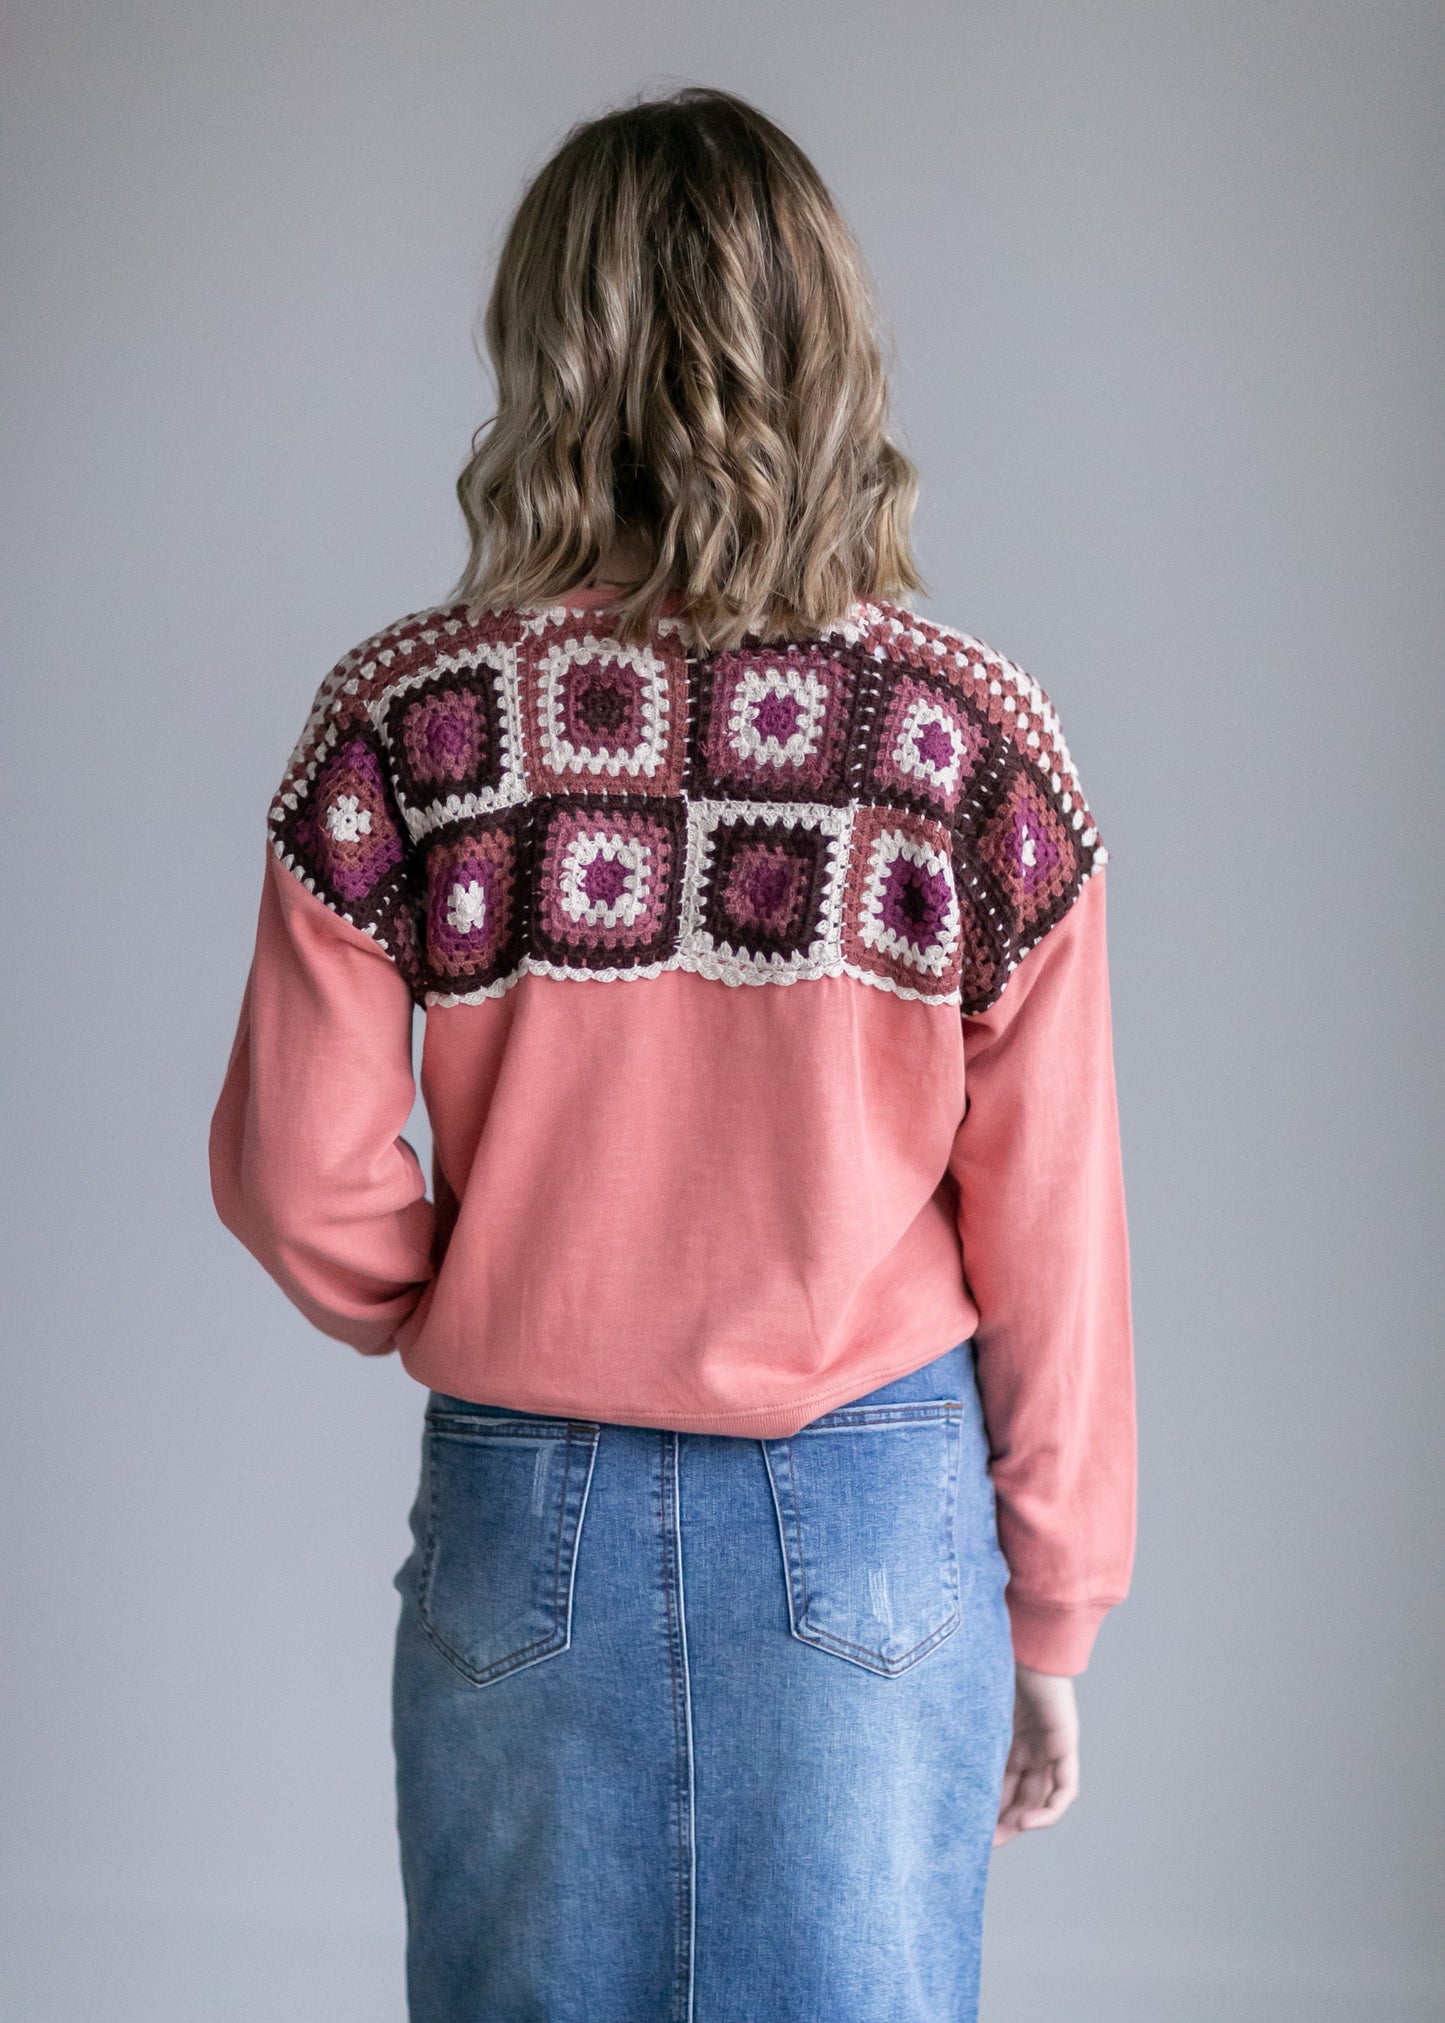 Crochet Yoke Pullover Sweater Tops